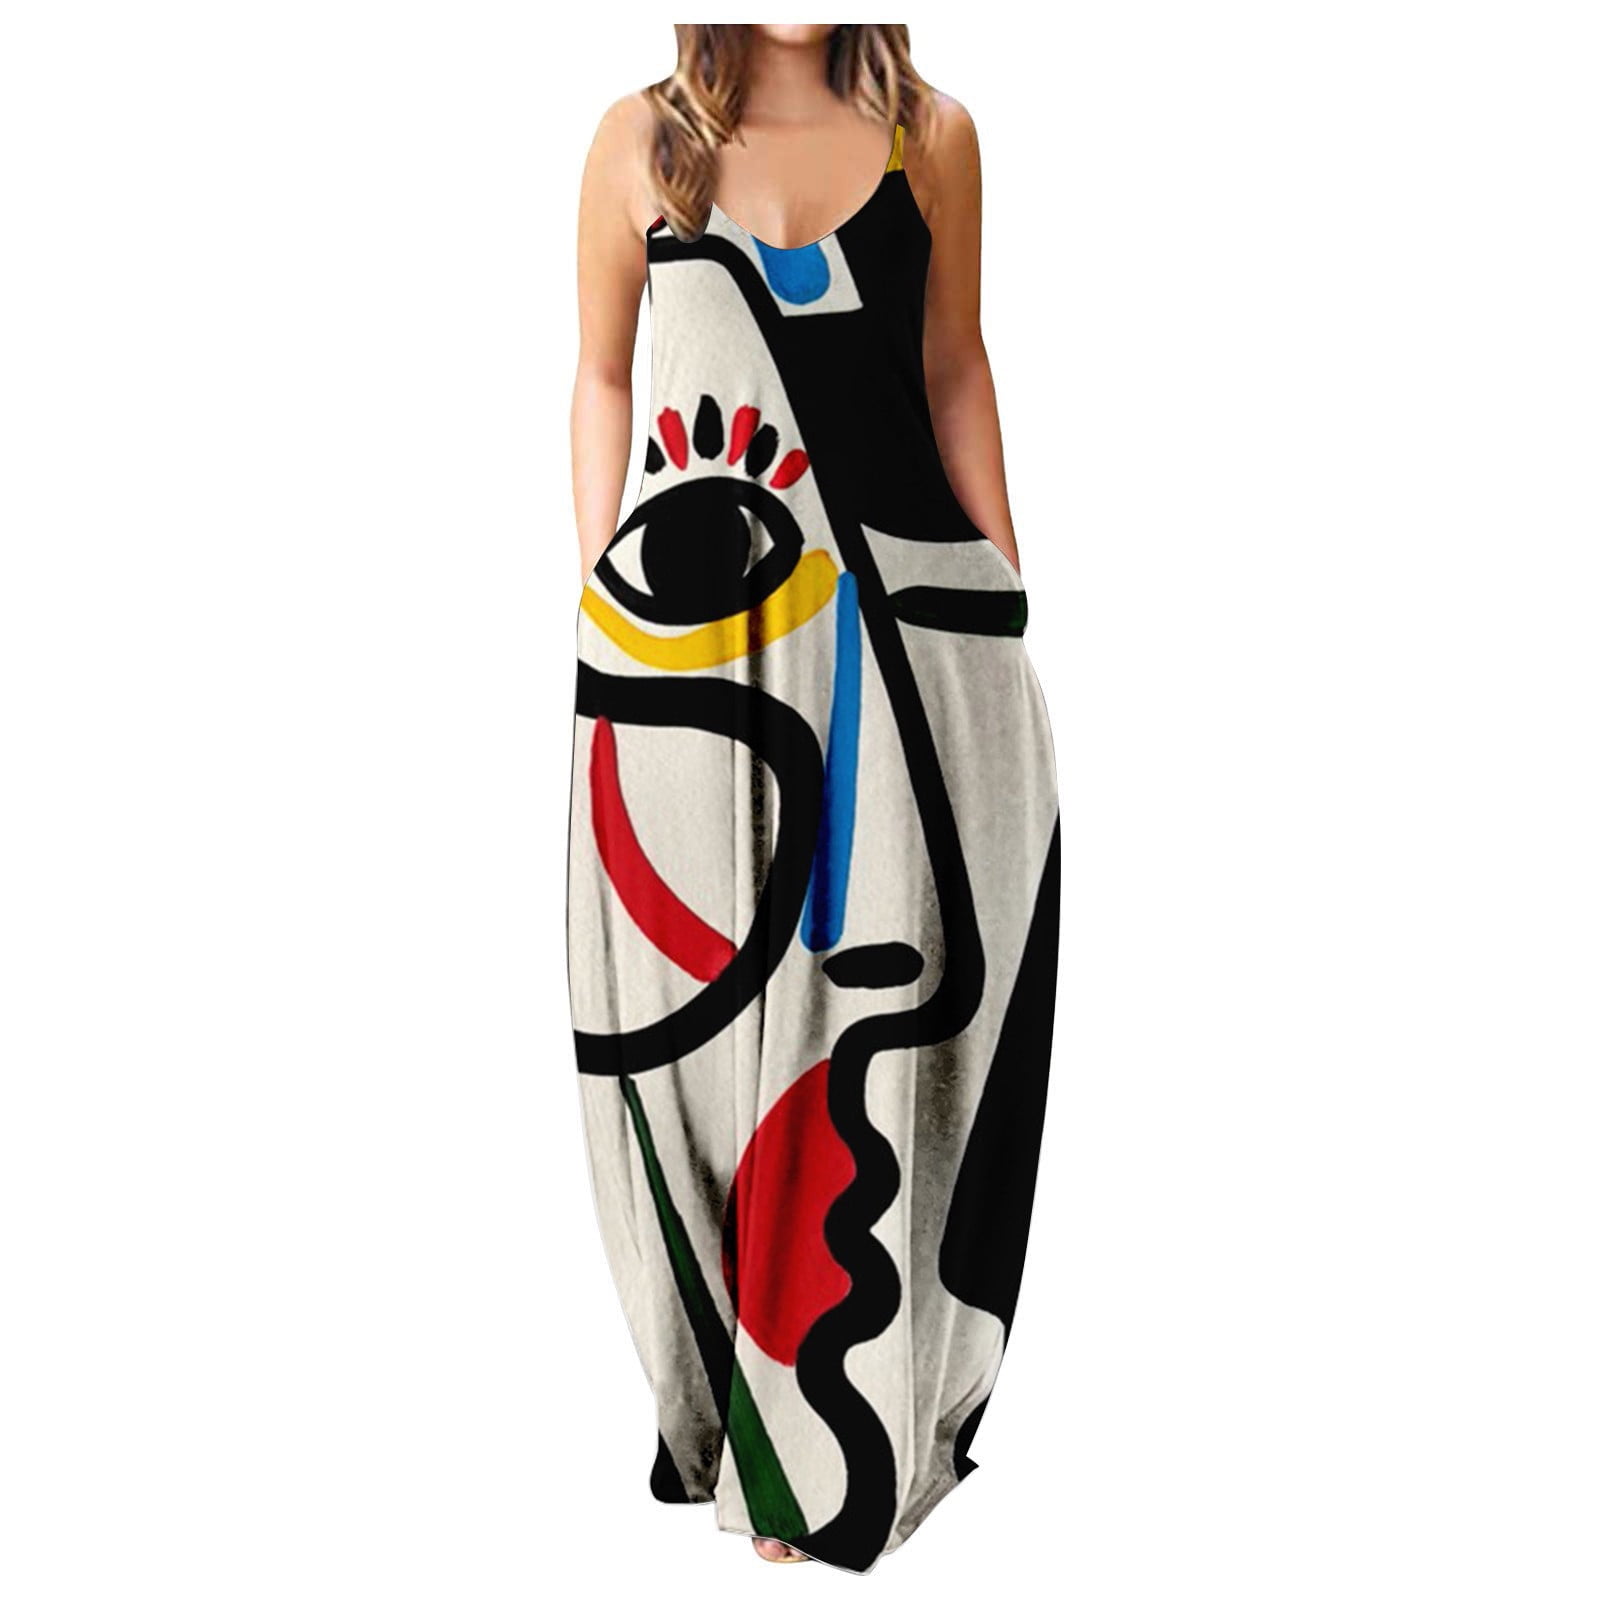 Oxodoi Hippie Soul Print Dress for Women Loose Daliy Boho Long Maxi Dress Casual Sleeveless Sundress Party Beach Tunic Dress